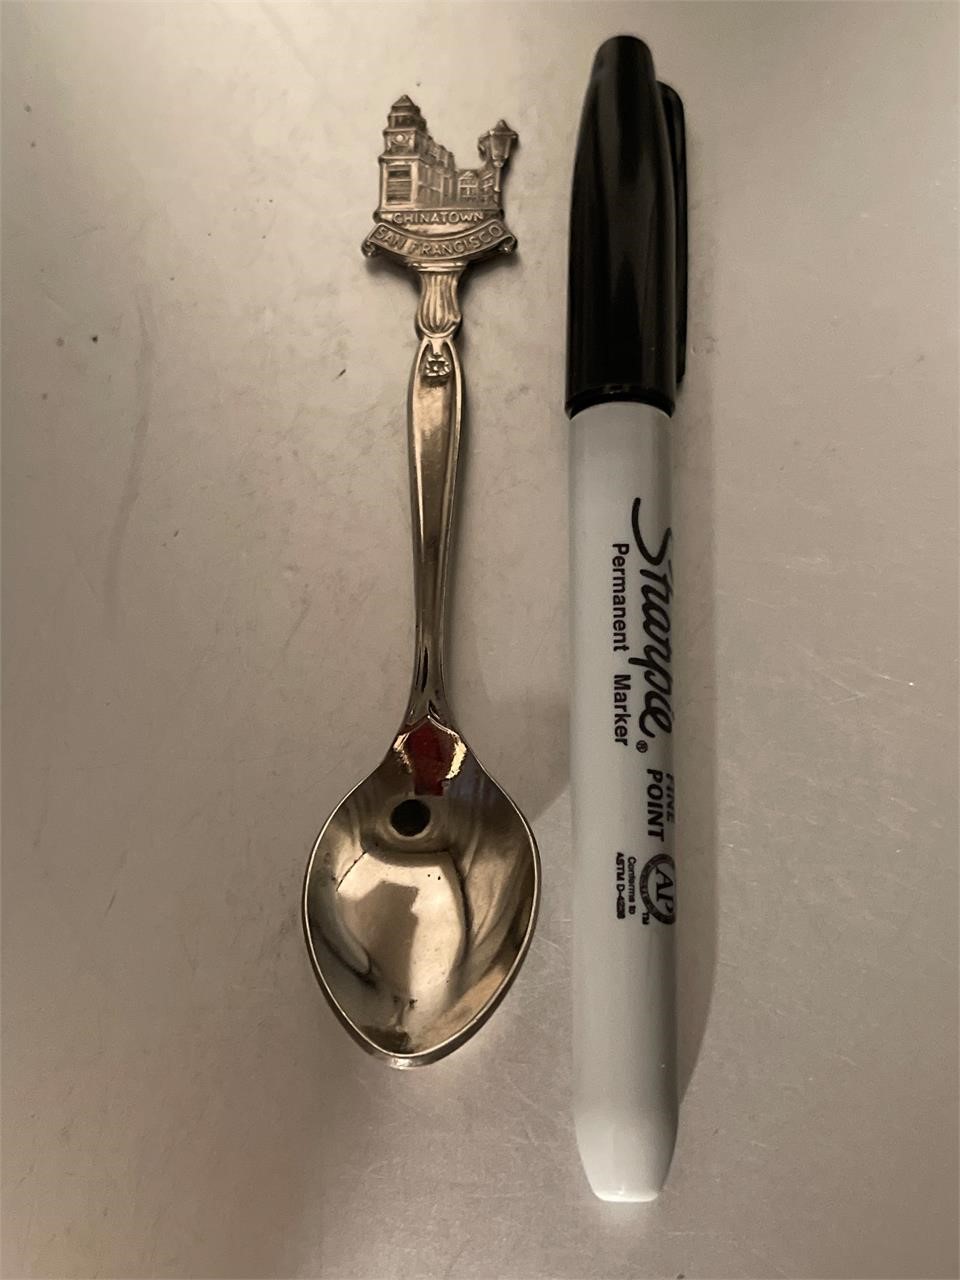 San Francisco spoon